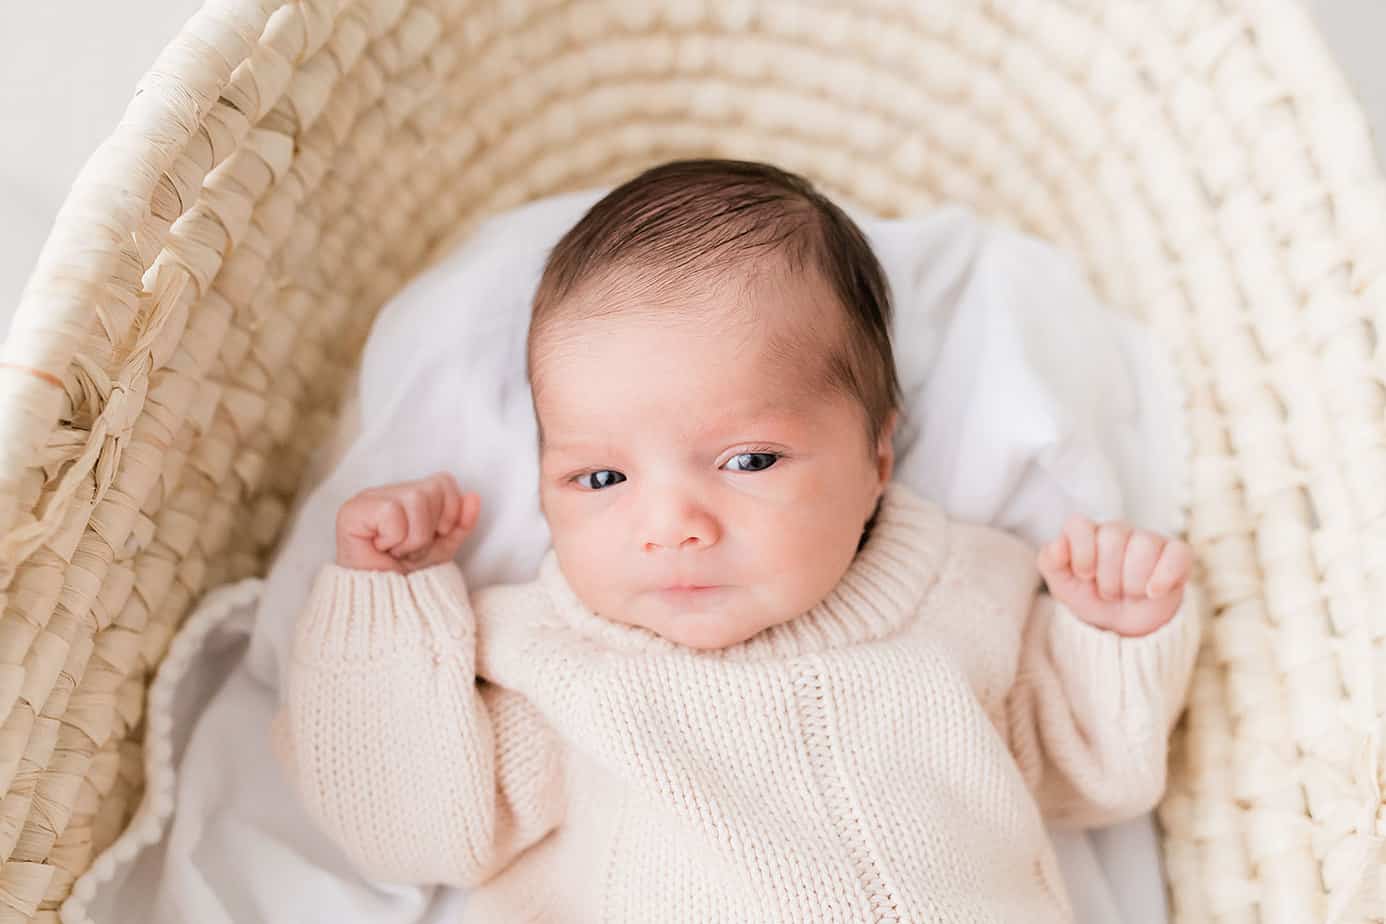 A baby boy is peacefully resting in a wicker basket.